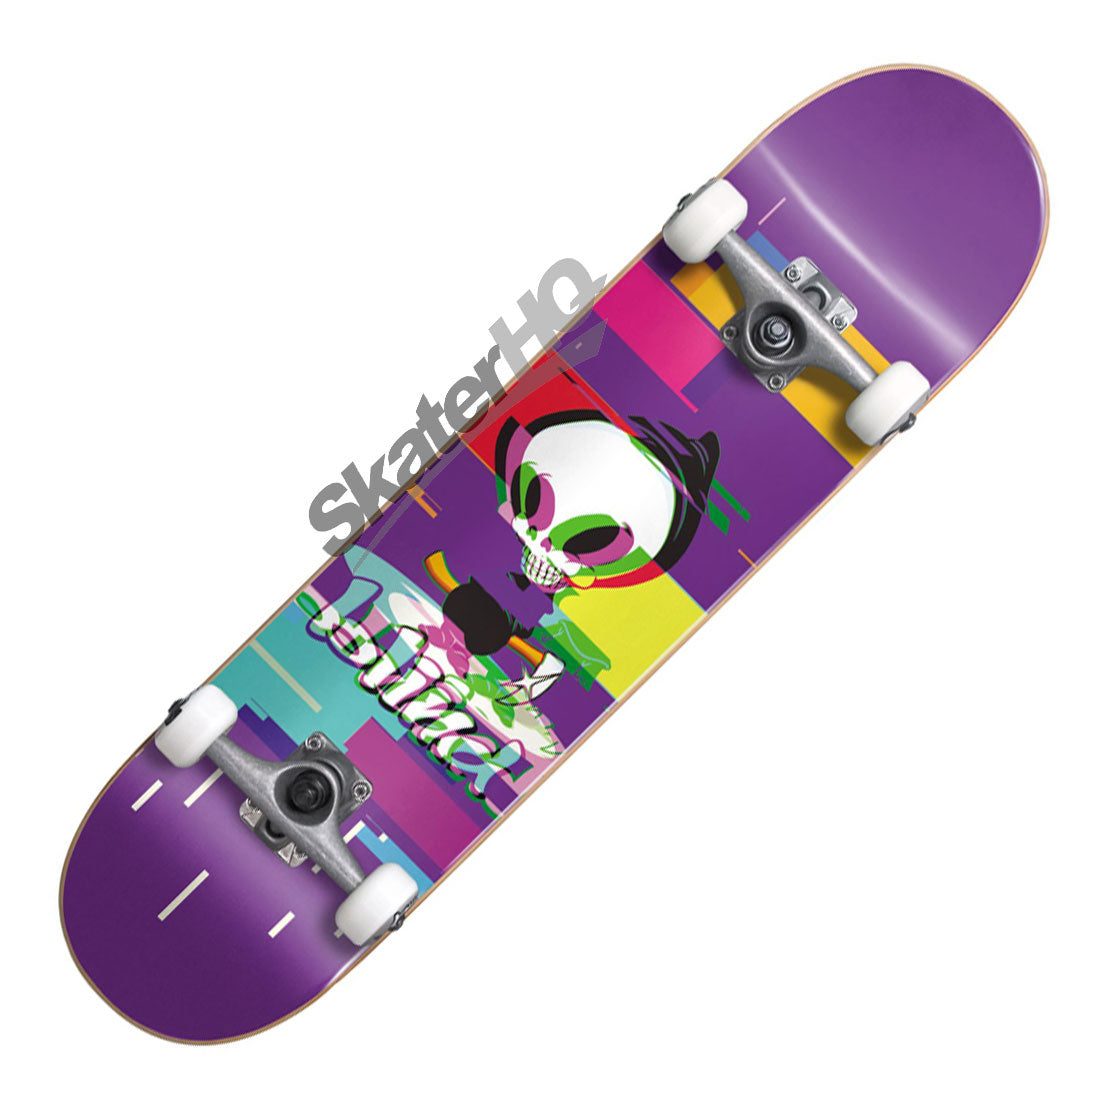 Blind Reaper Glitch FP 7.75 Complete - Purple Skateboard Completes Modern Street